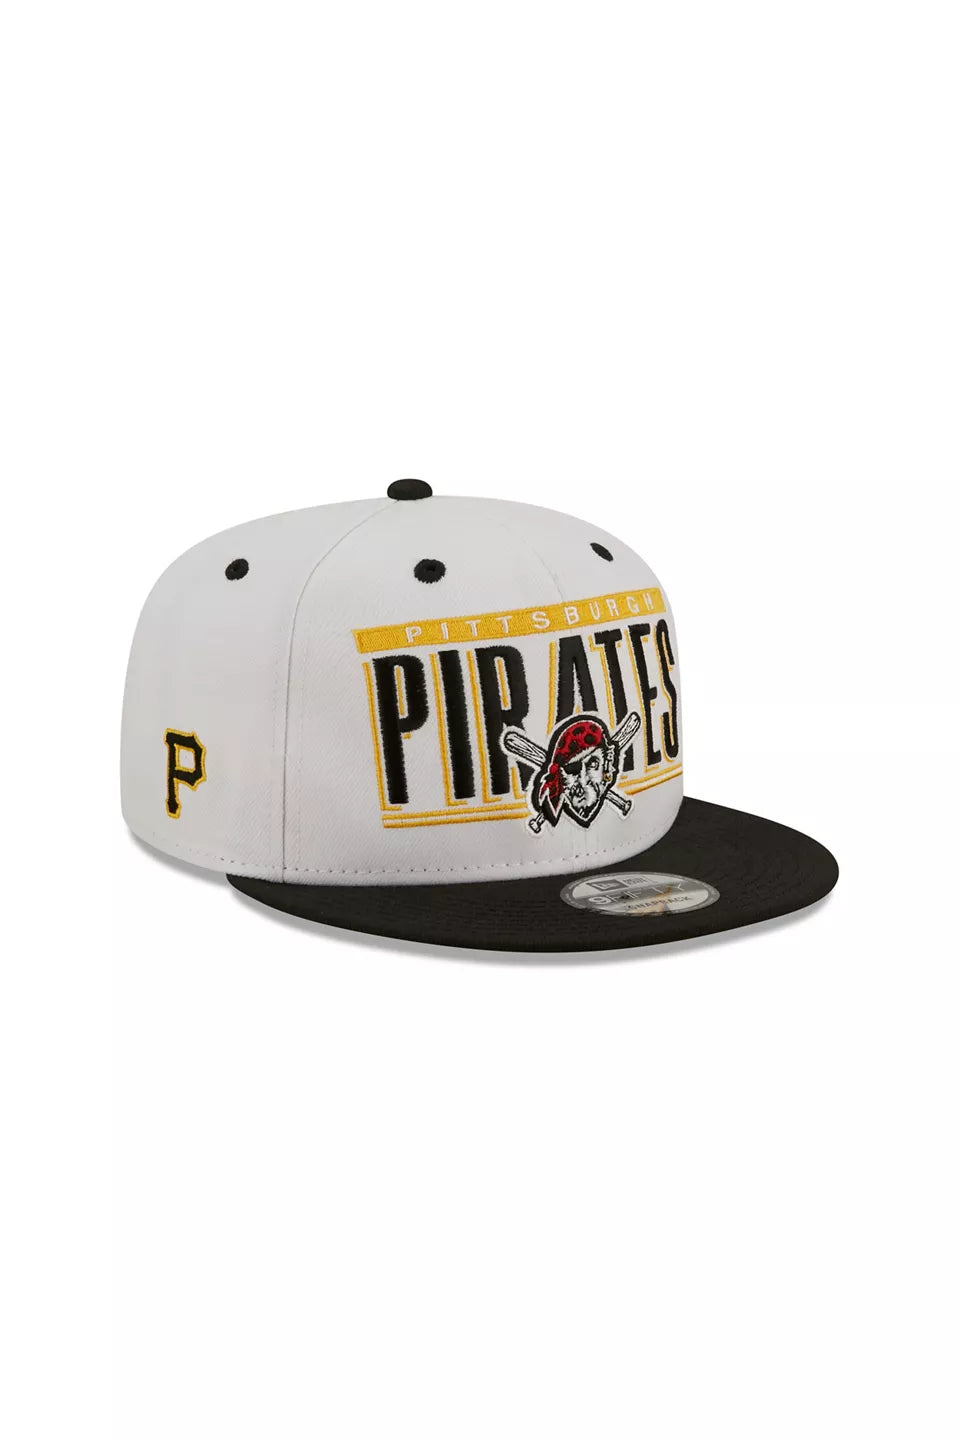 Pittsburgh Pirates New Era Retro Title 9FIFTY Snapback Hat - White